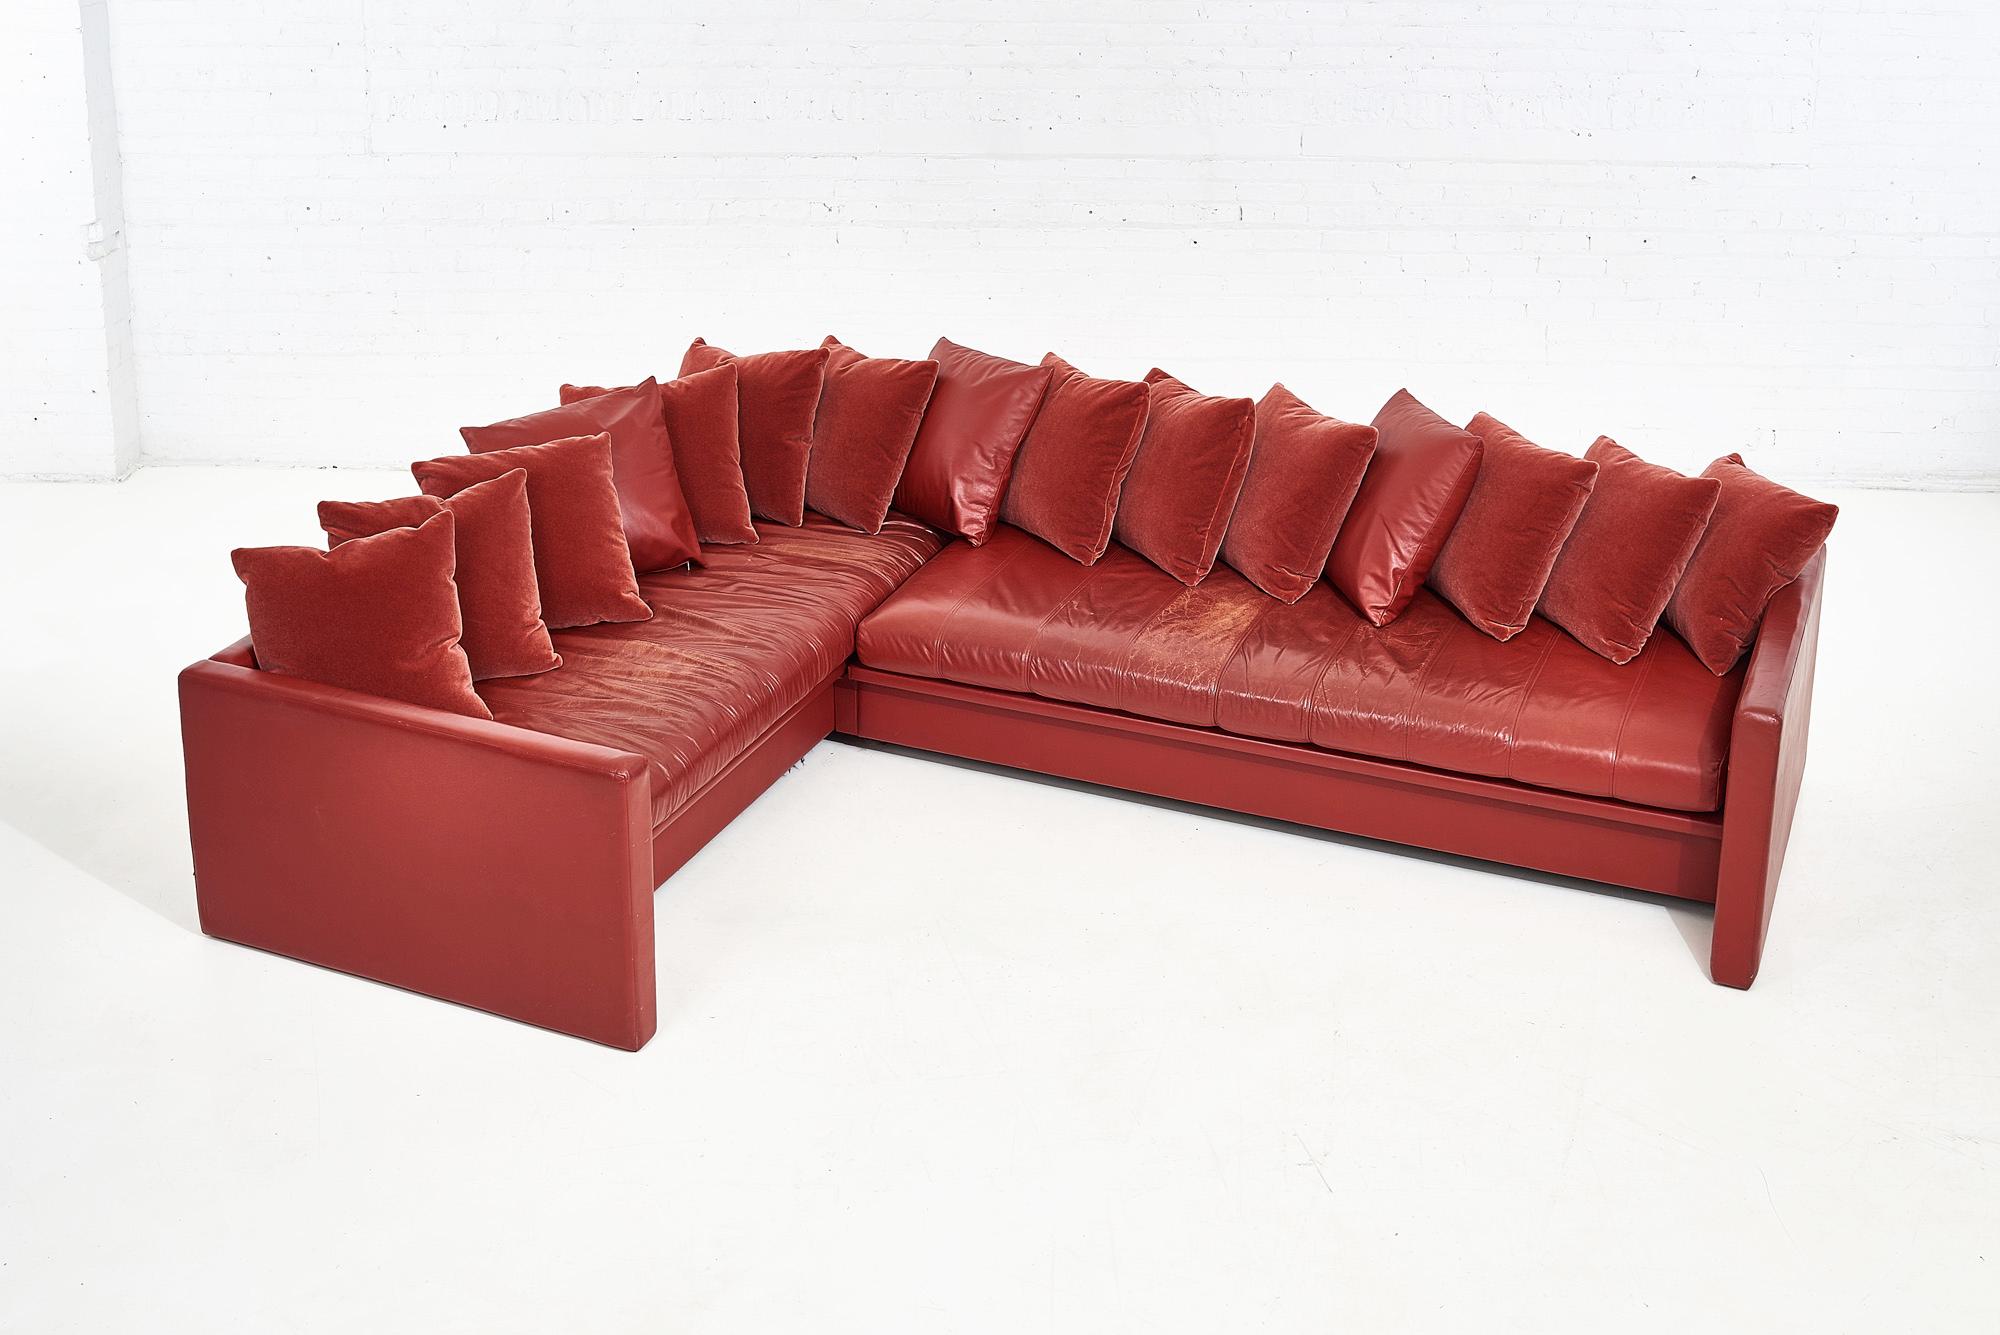 Joseph D'Urso Leder-Sofa mit Modulen, Knoll, 1980 (amerikanisch) im Angebot